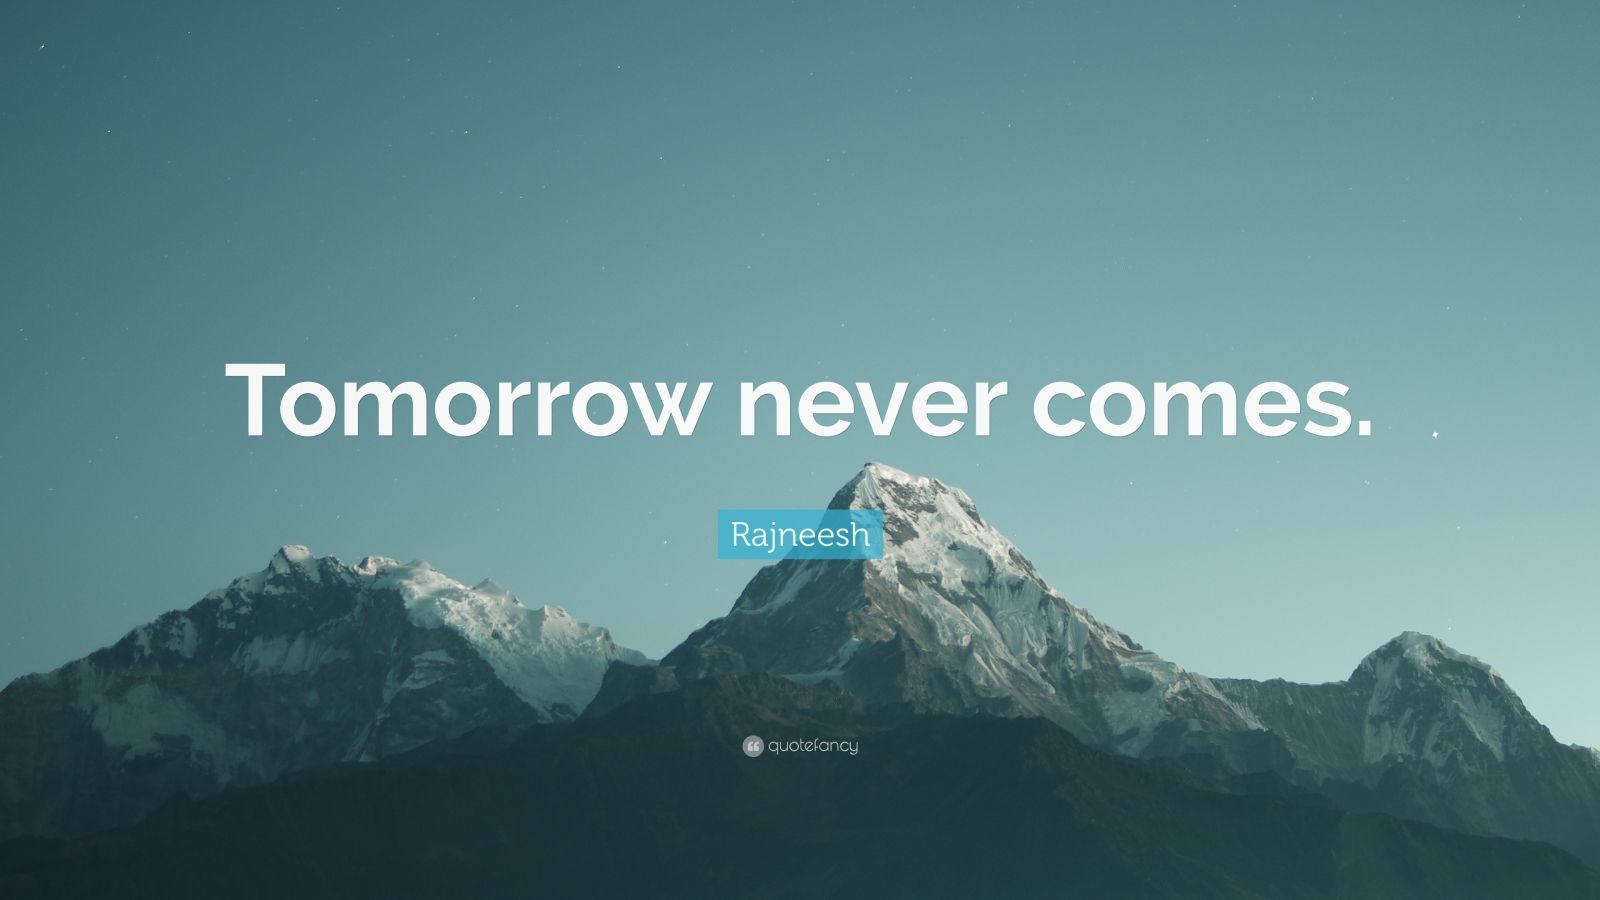 Rajneesh Quote: “Tomorrow never comes.” (7 wallpapers) - Quotefancy